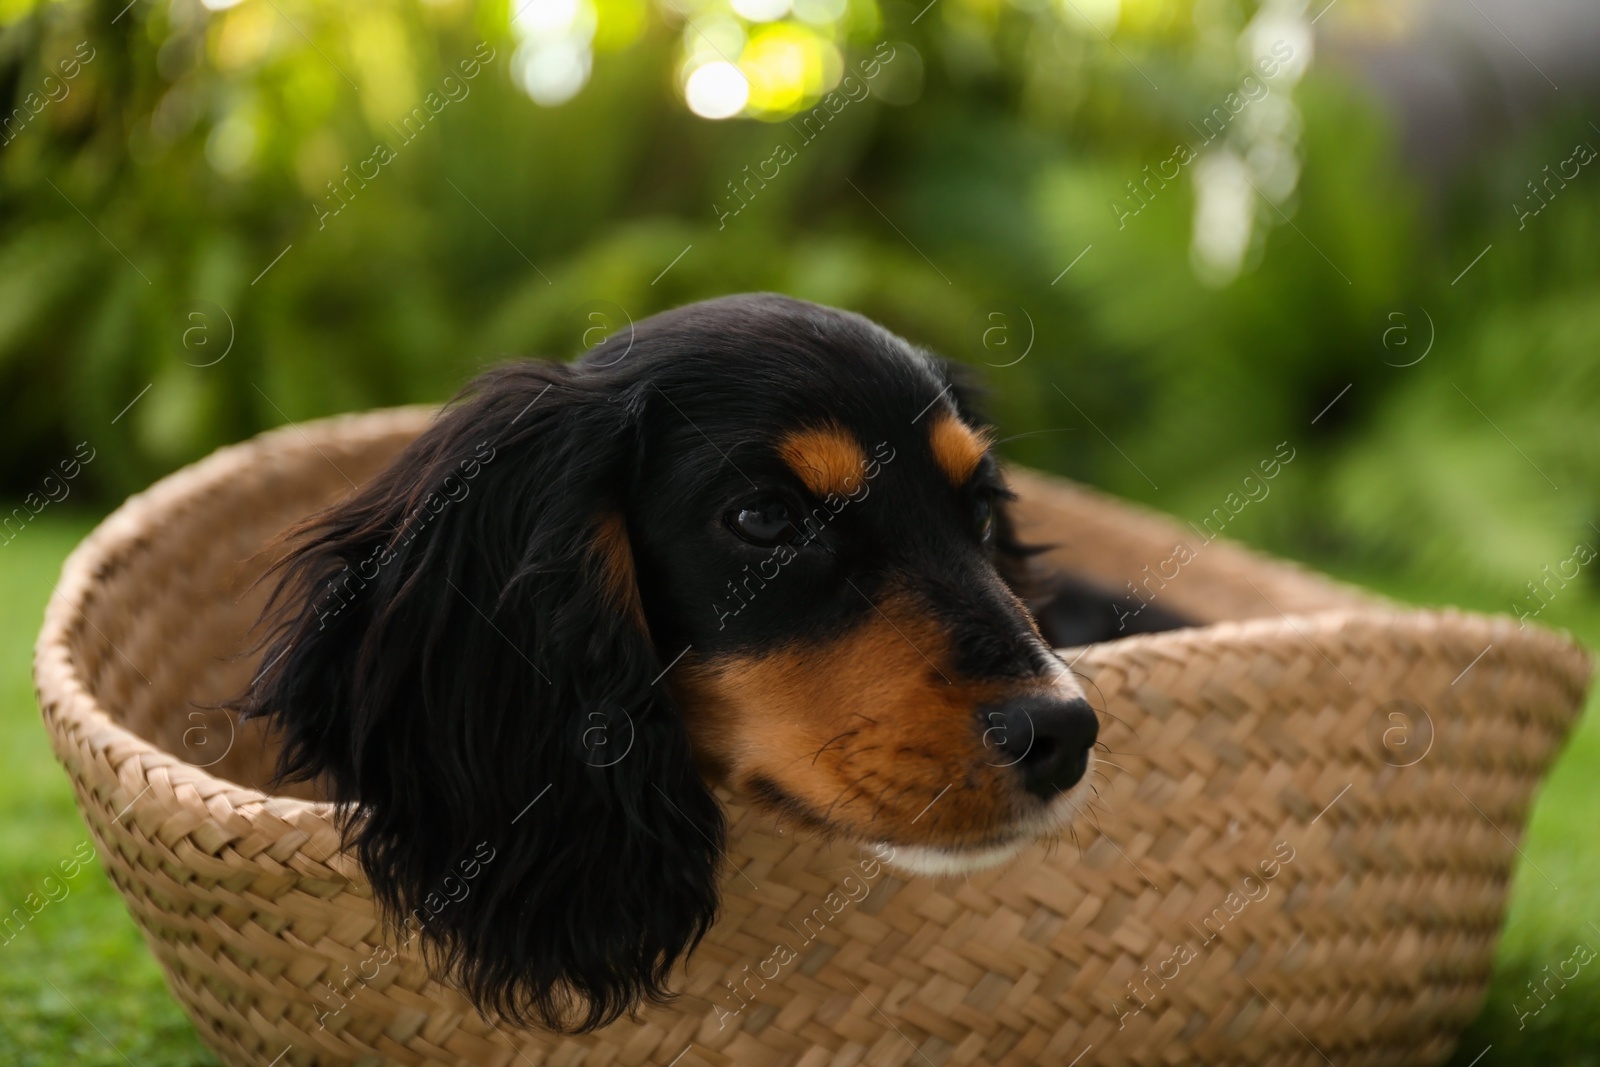 Photo of Cute dog relaxing in wicker basket outdoors, closeup. Friendly pet